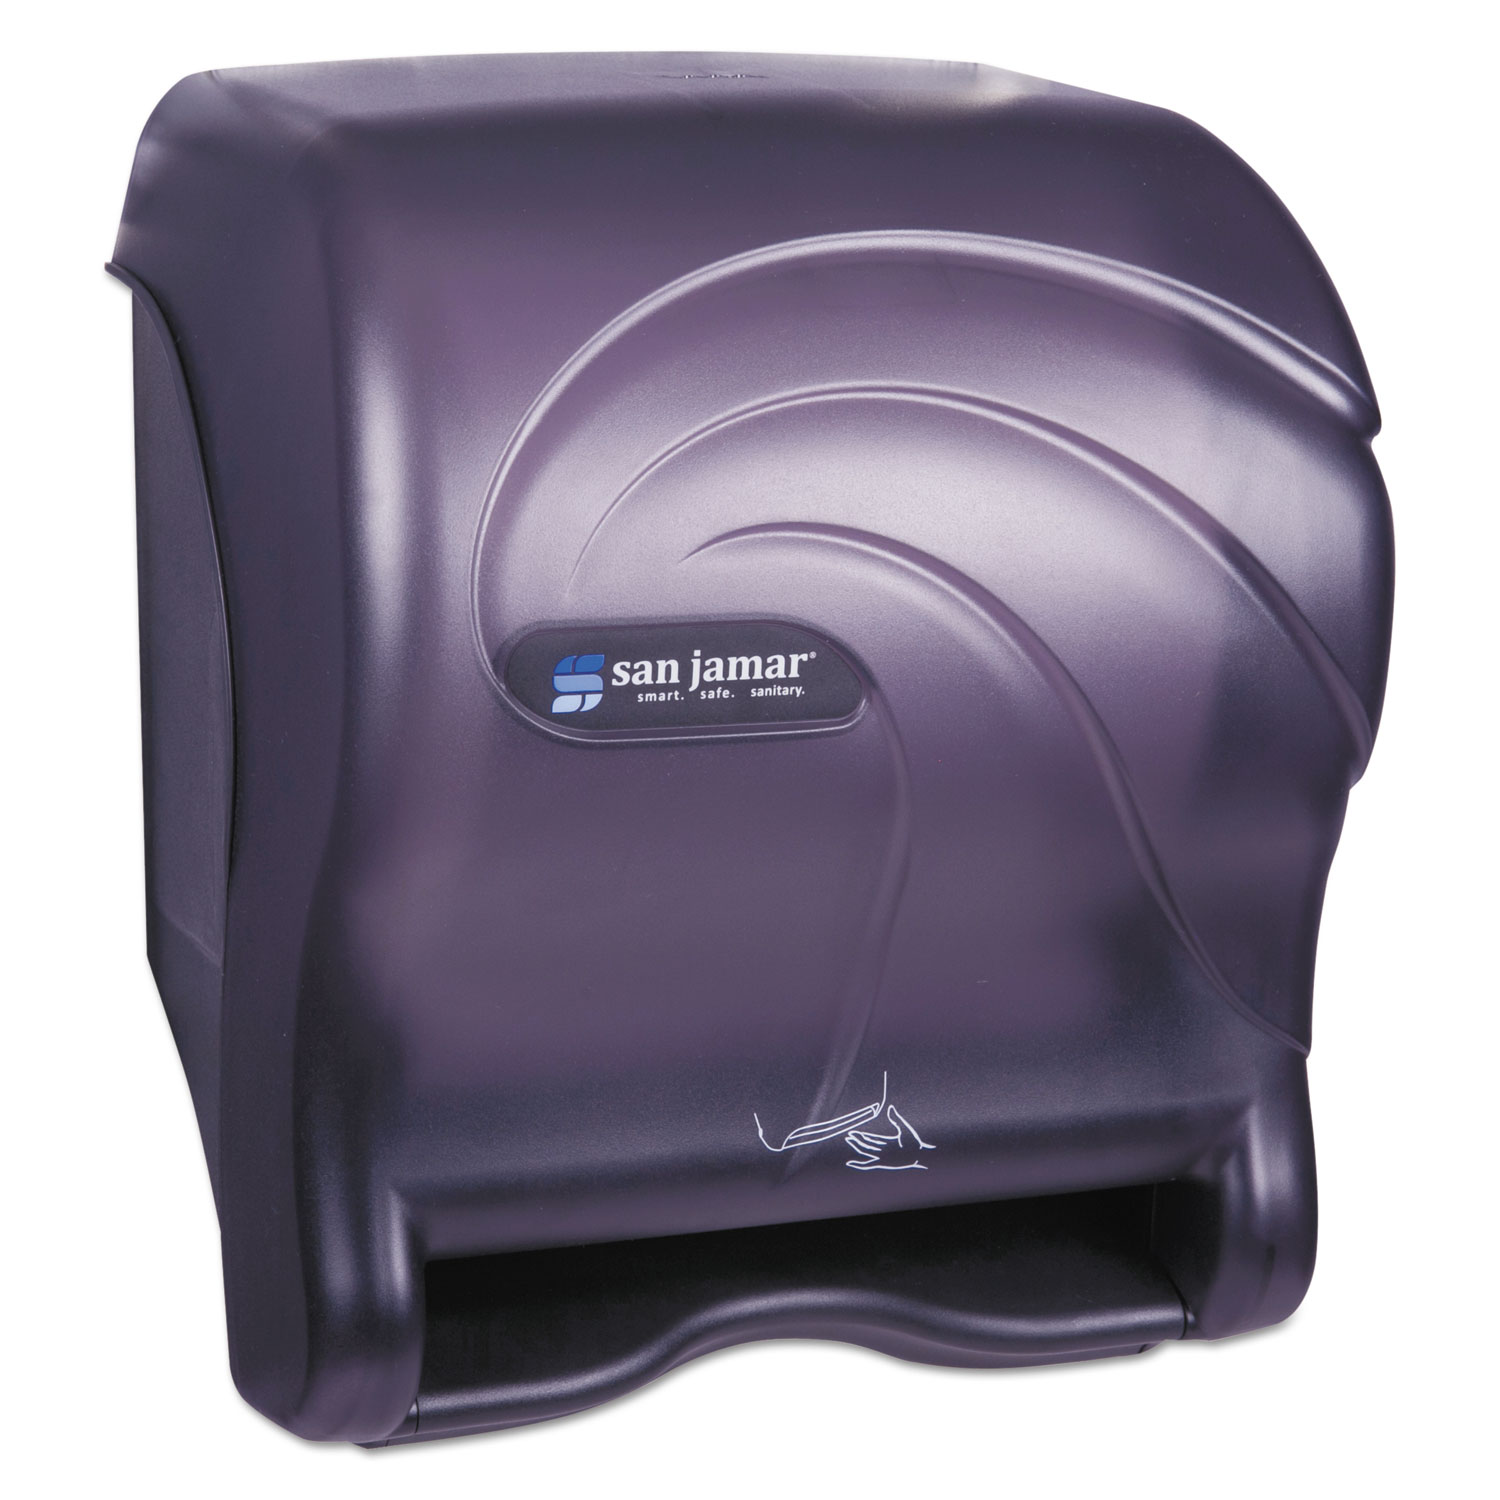  San Jamar SAN T8490TBK Oceans Smart Essence Electronic Towel Dispenser,14.4hx11.8wx9.1d, Black, Plastic (SJMT8490TBK) 